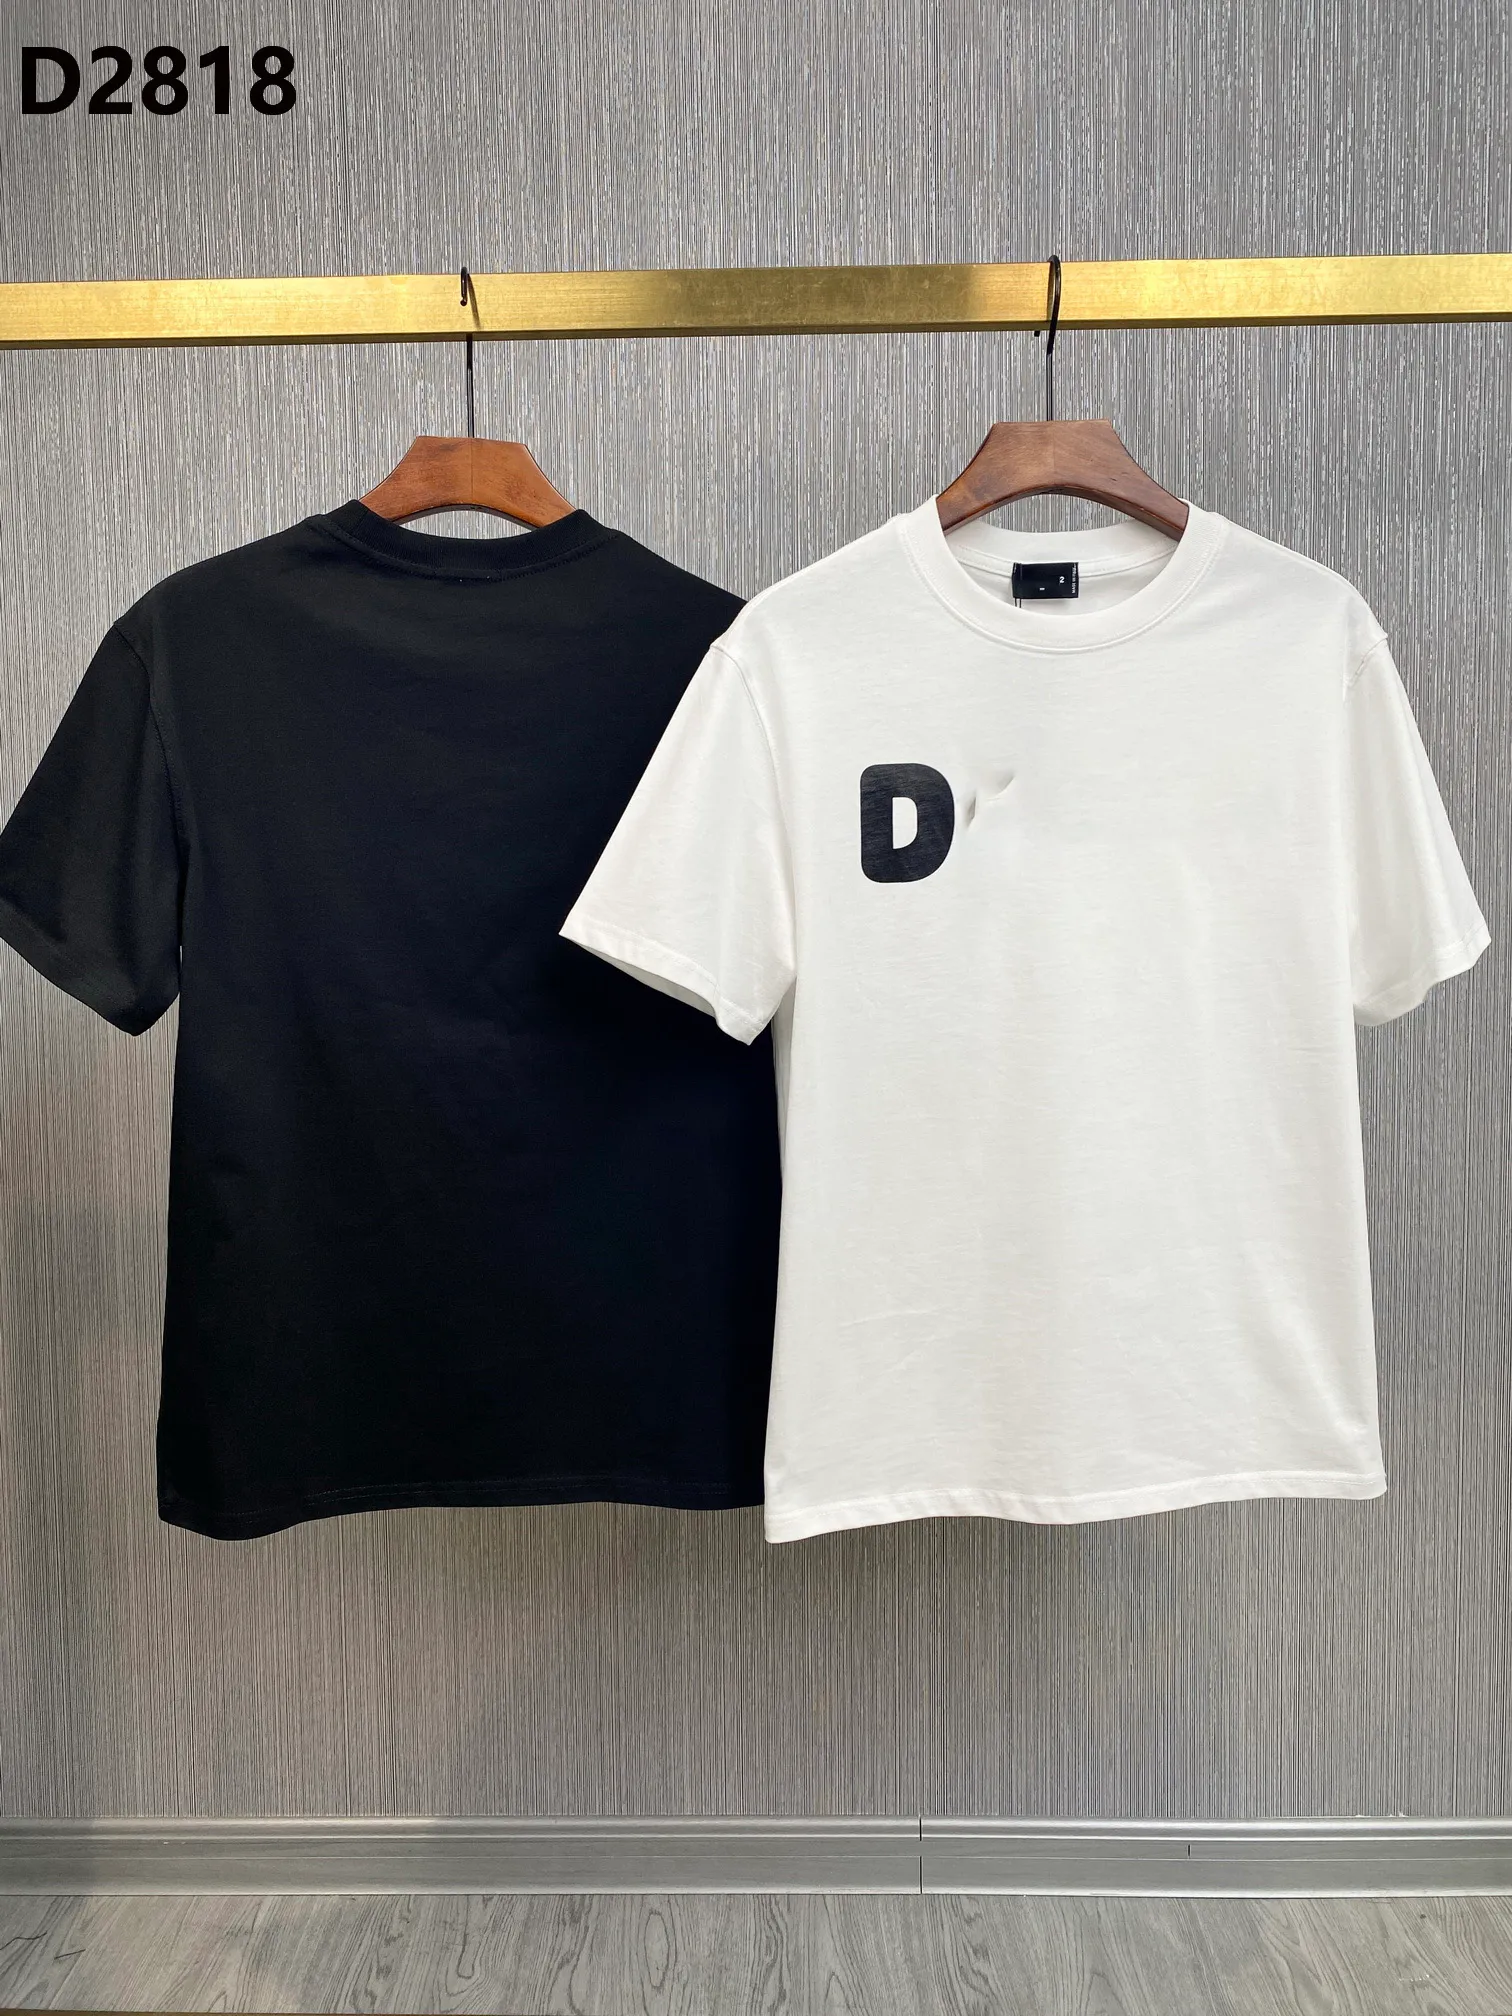 Italy New Mens Designer T shirt Paris fashion Tshirts Summer D T-shirt Male Top Quality 100% Cotton M-XXXL 28181